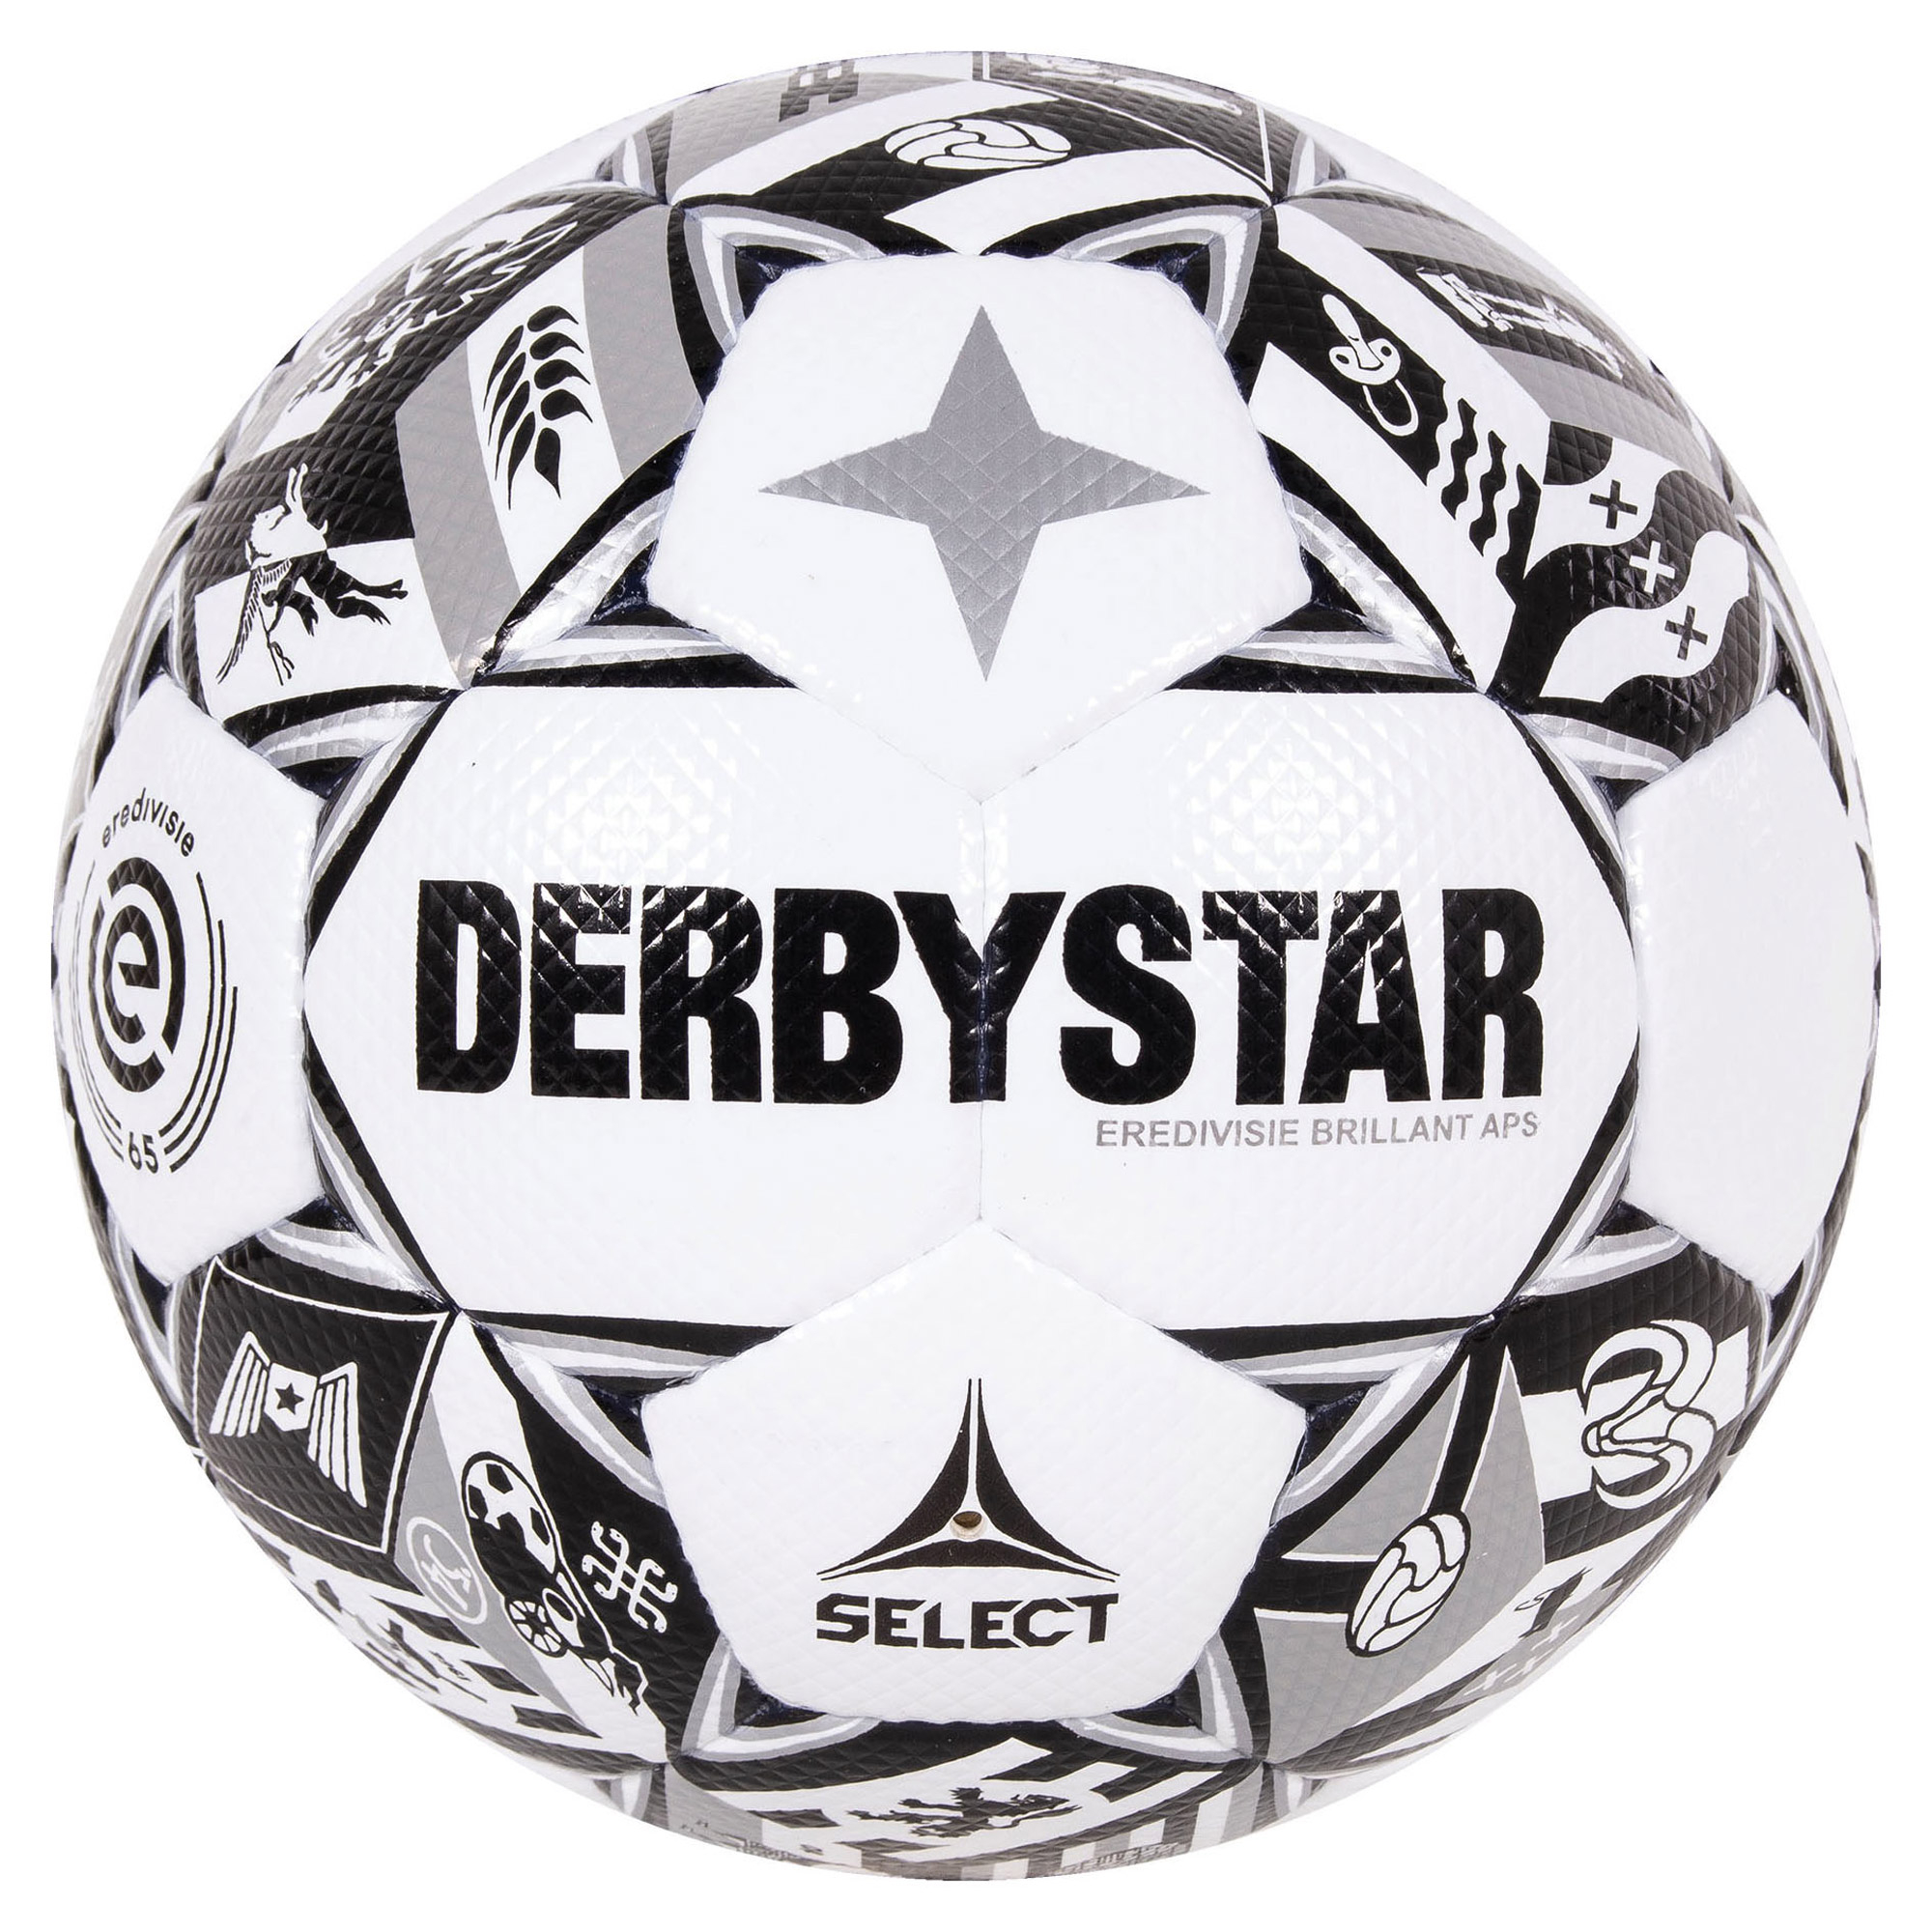 Ballon de football Derby Star Eredivisie Brillant 21/22